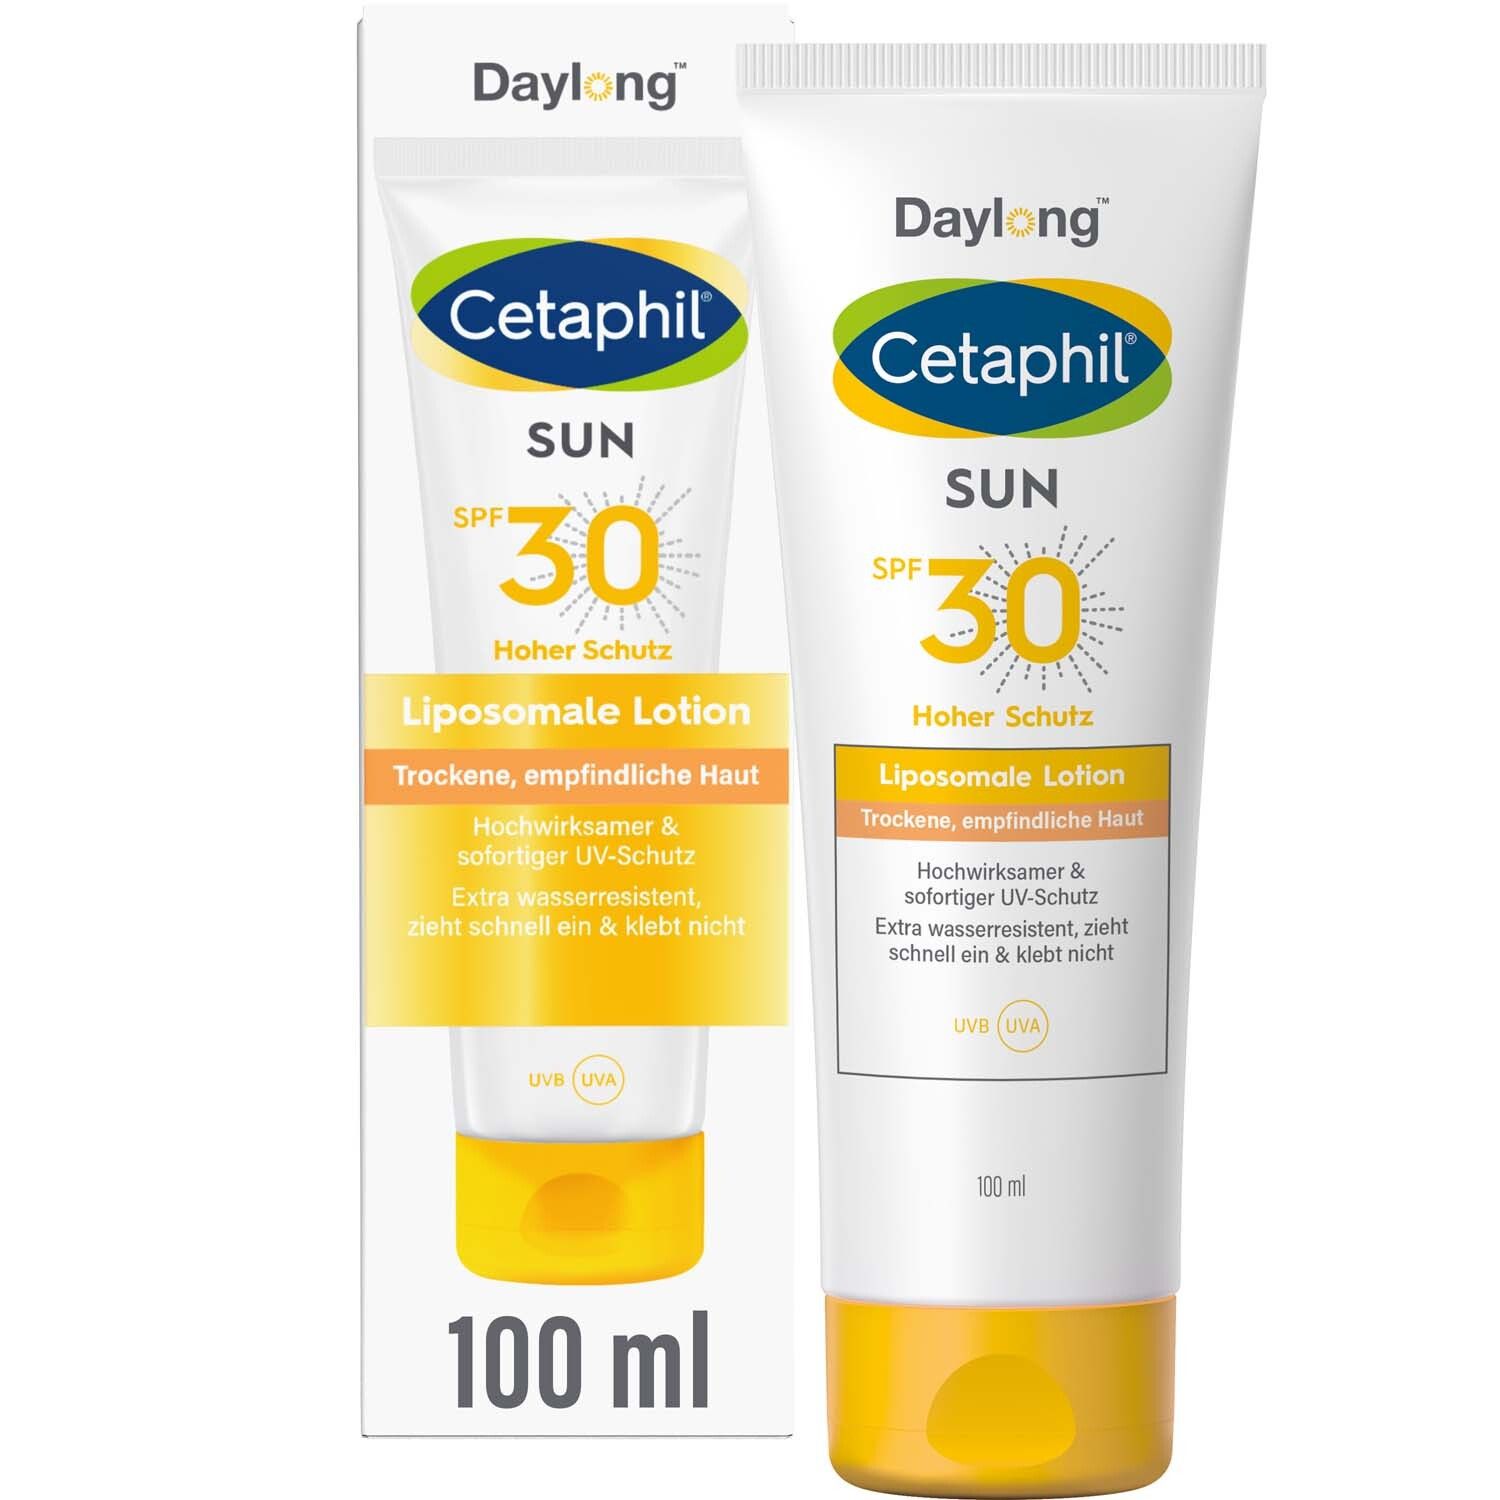 CETAPHIL SUN Liposomale Lotion SPF 30 Feuchtigkeitsspendende Sonnenschutzlotion